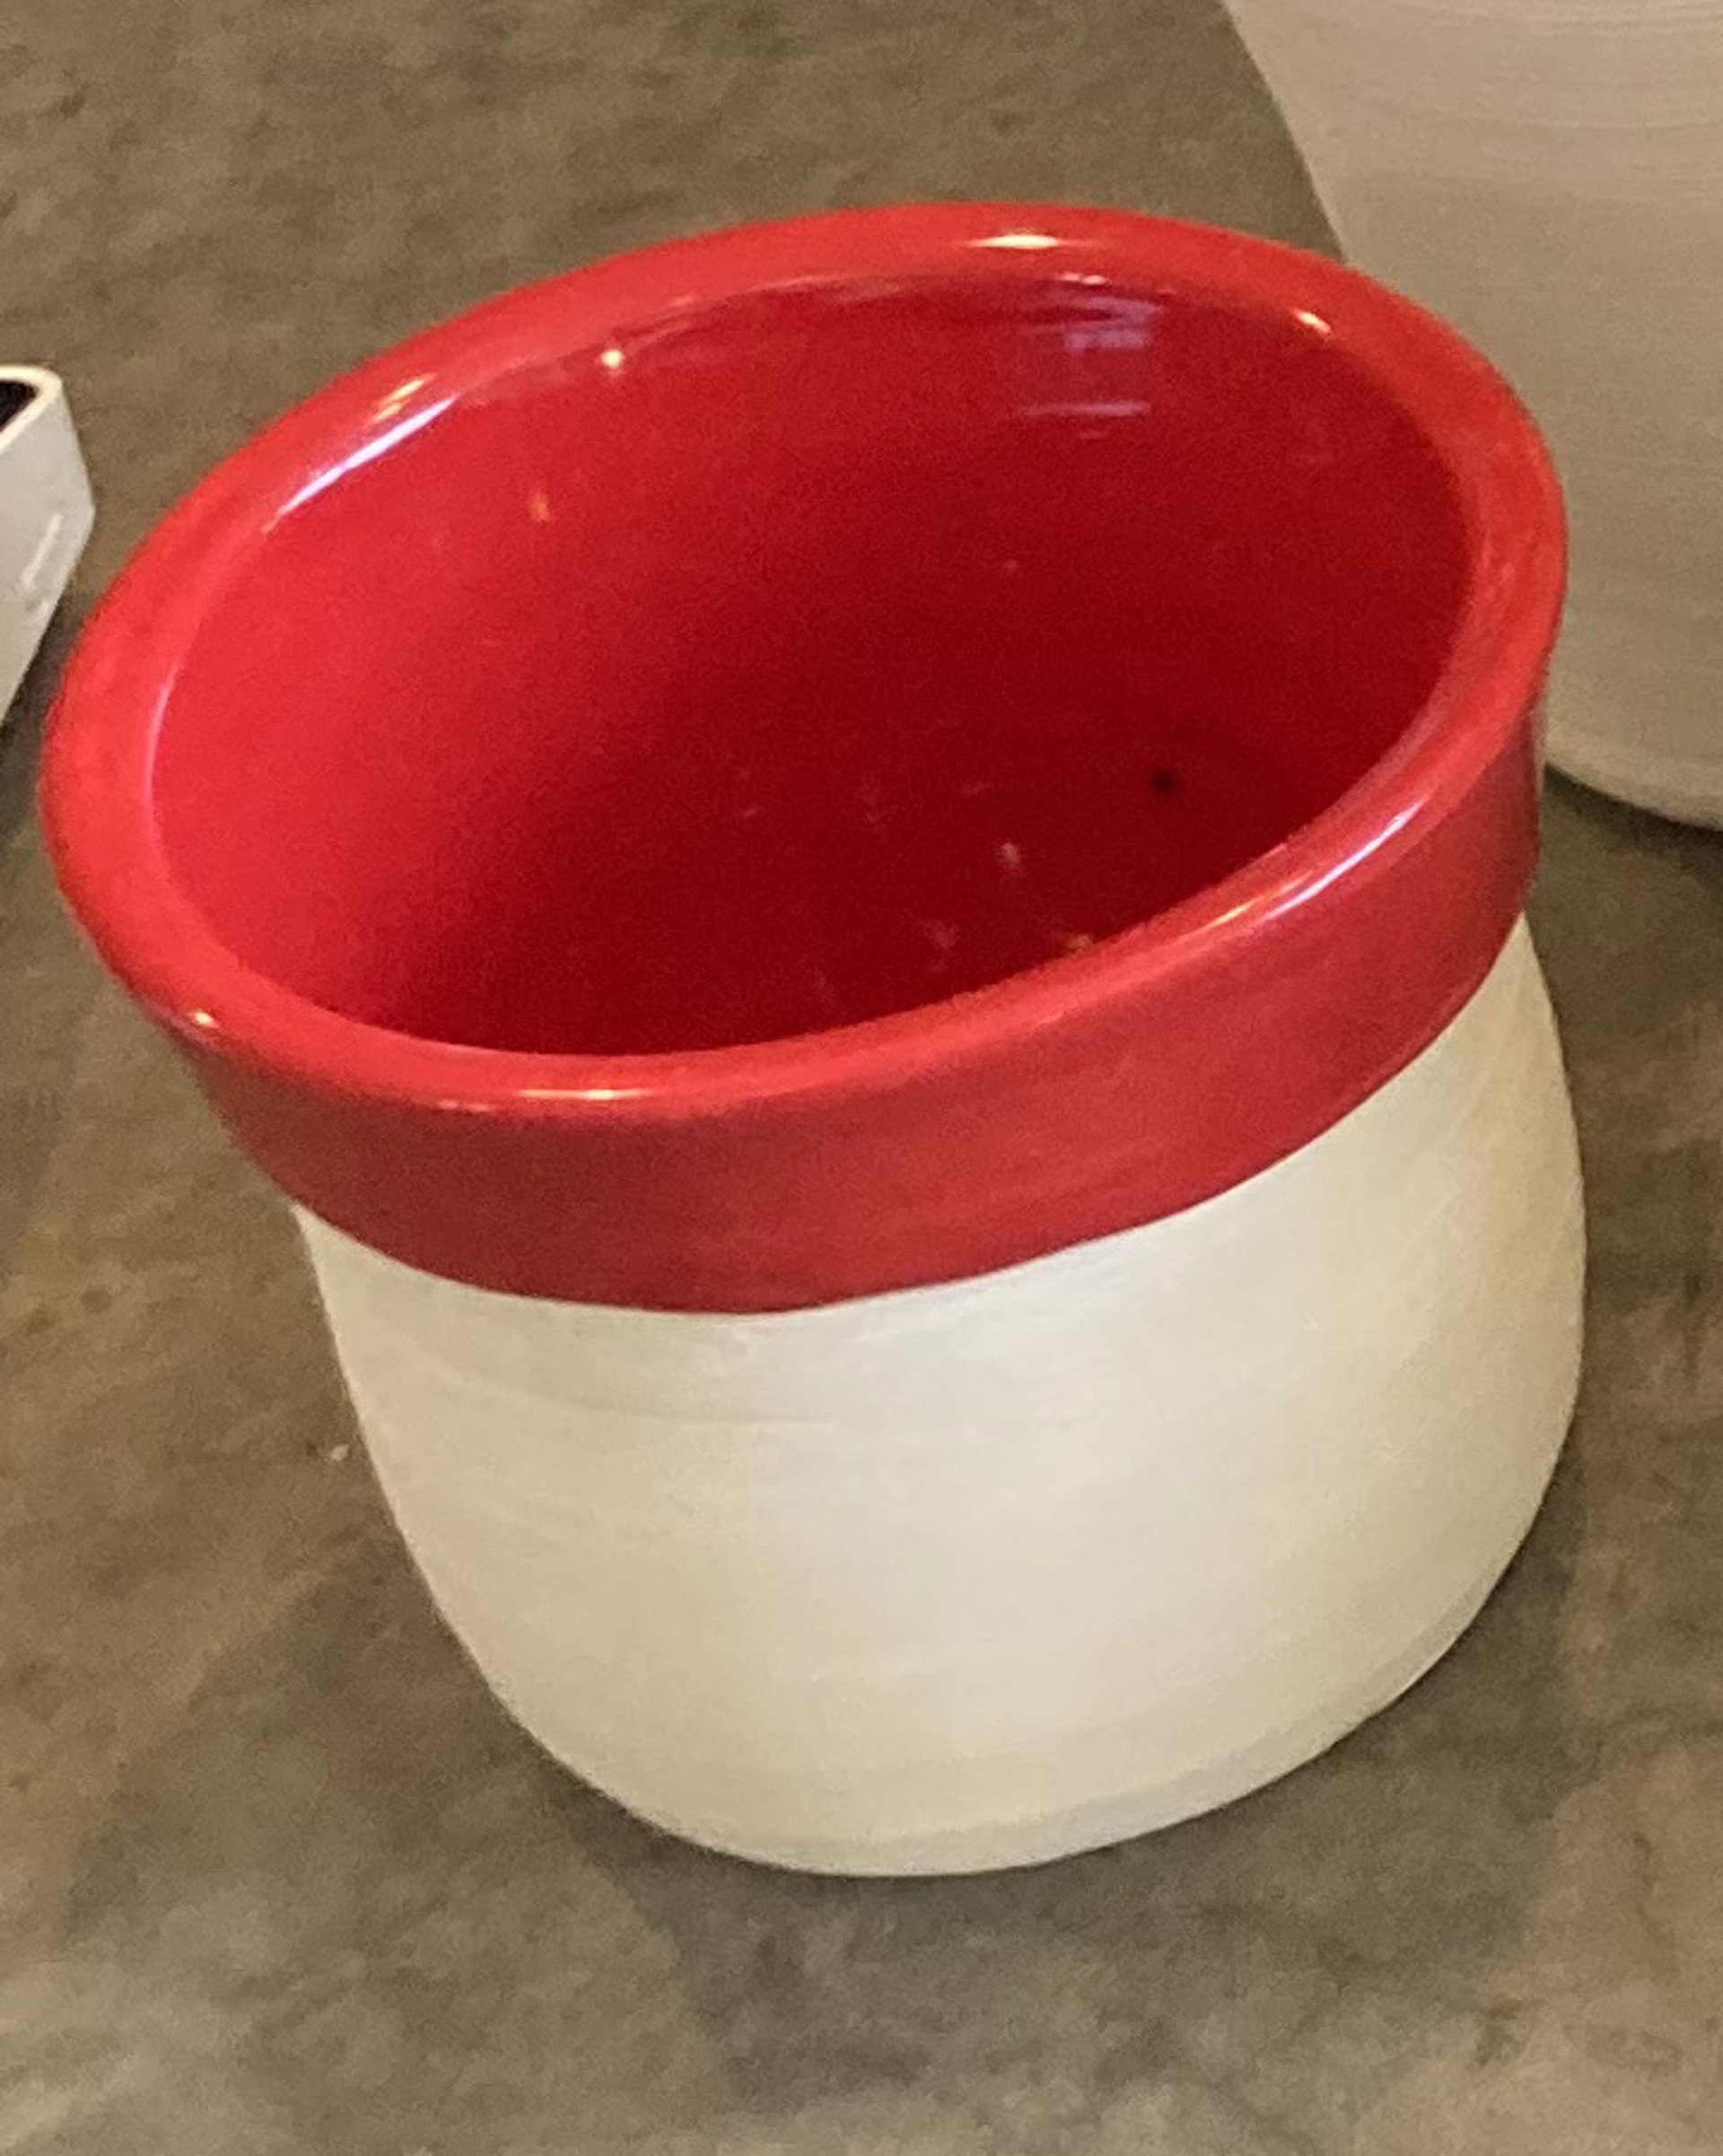 Red Vase by Austin Center